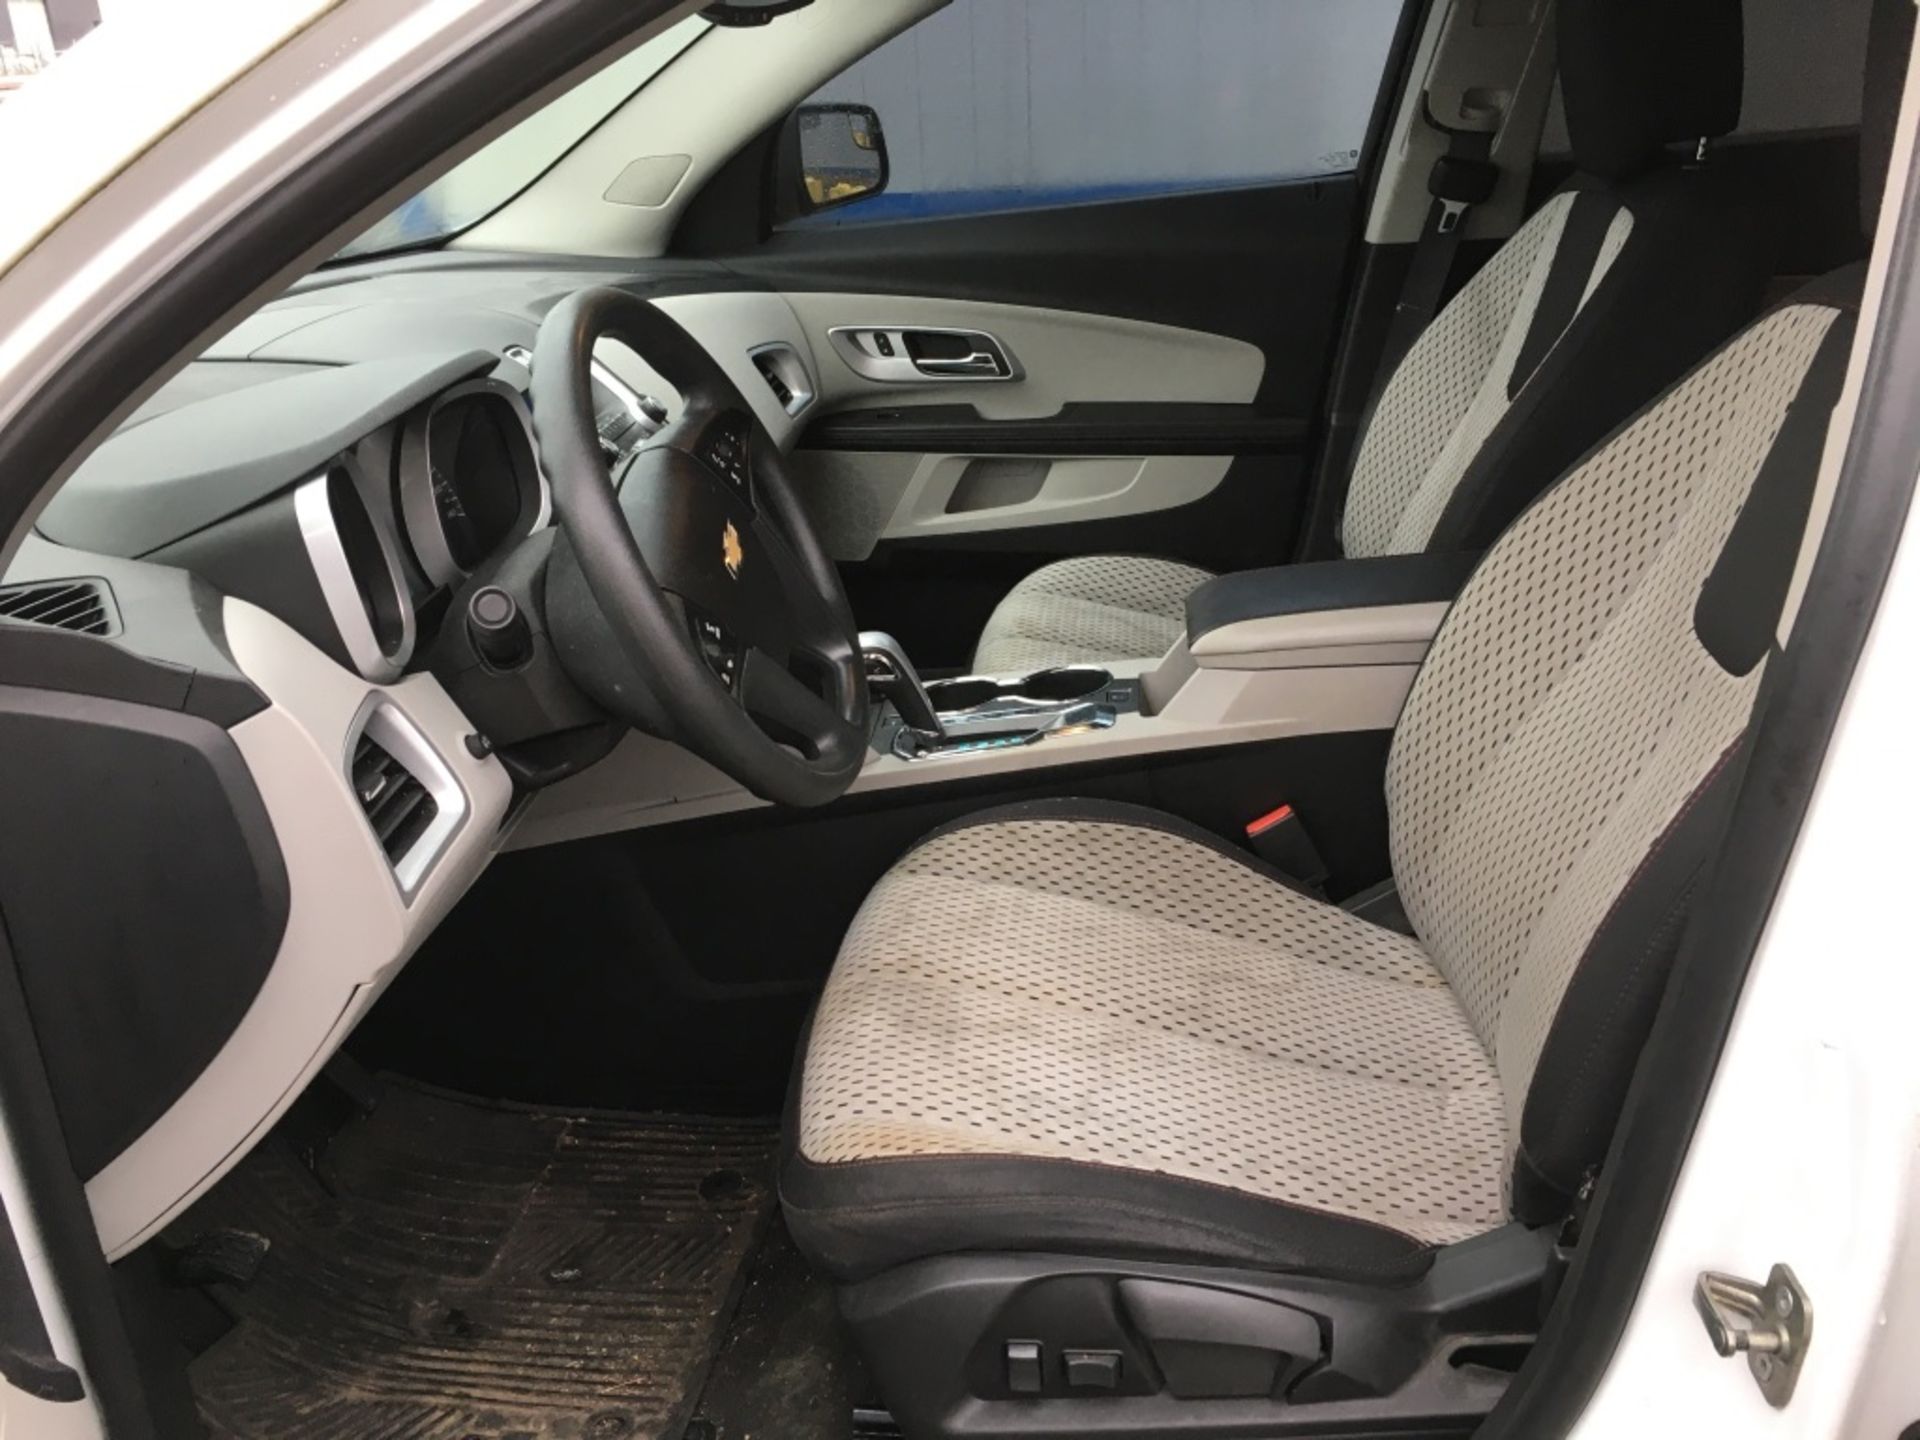 2014 Chevrolet Equinox AWD SUV - Image 8 of 19